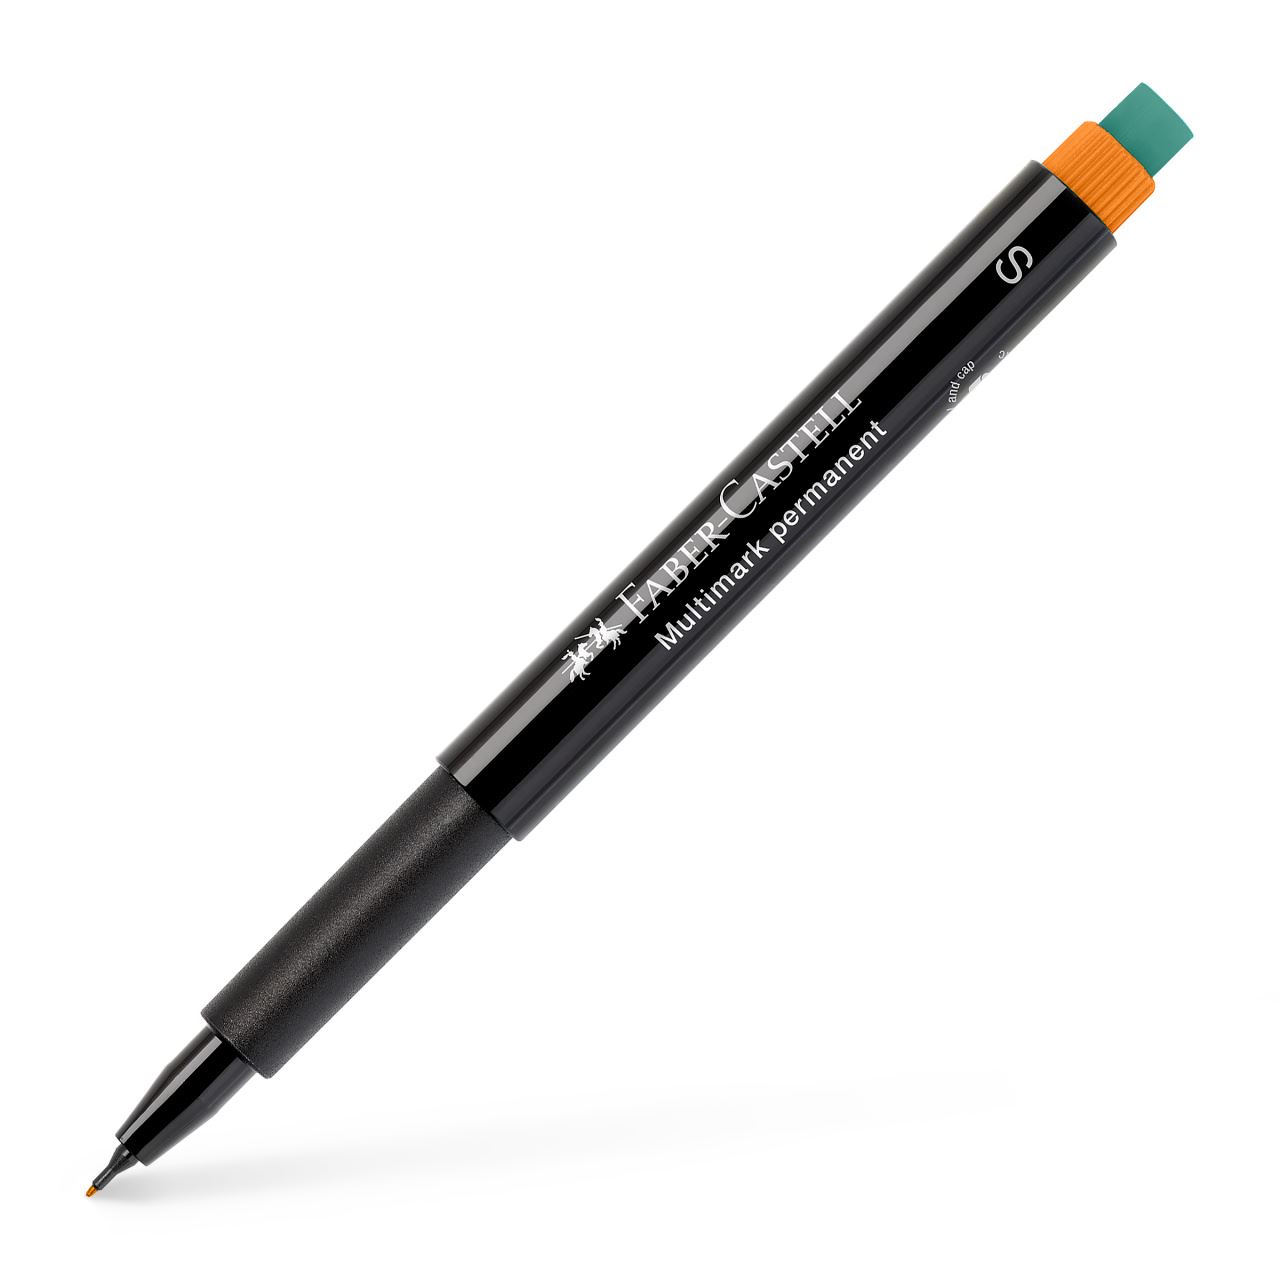 Faber-Castell - Rotulador multifuncional permanente Multimark, S, naranja